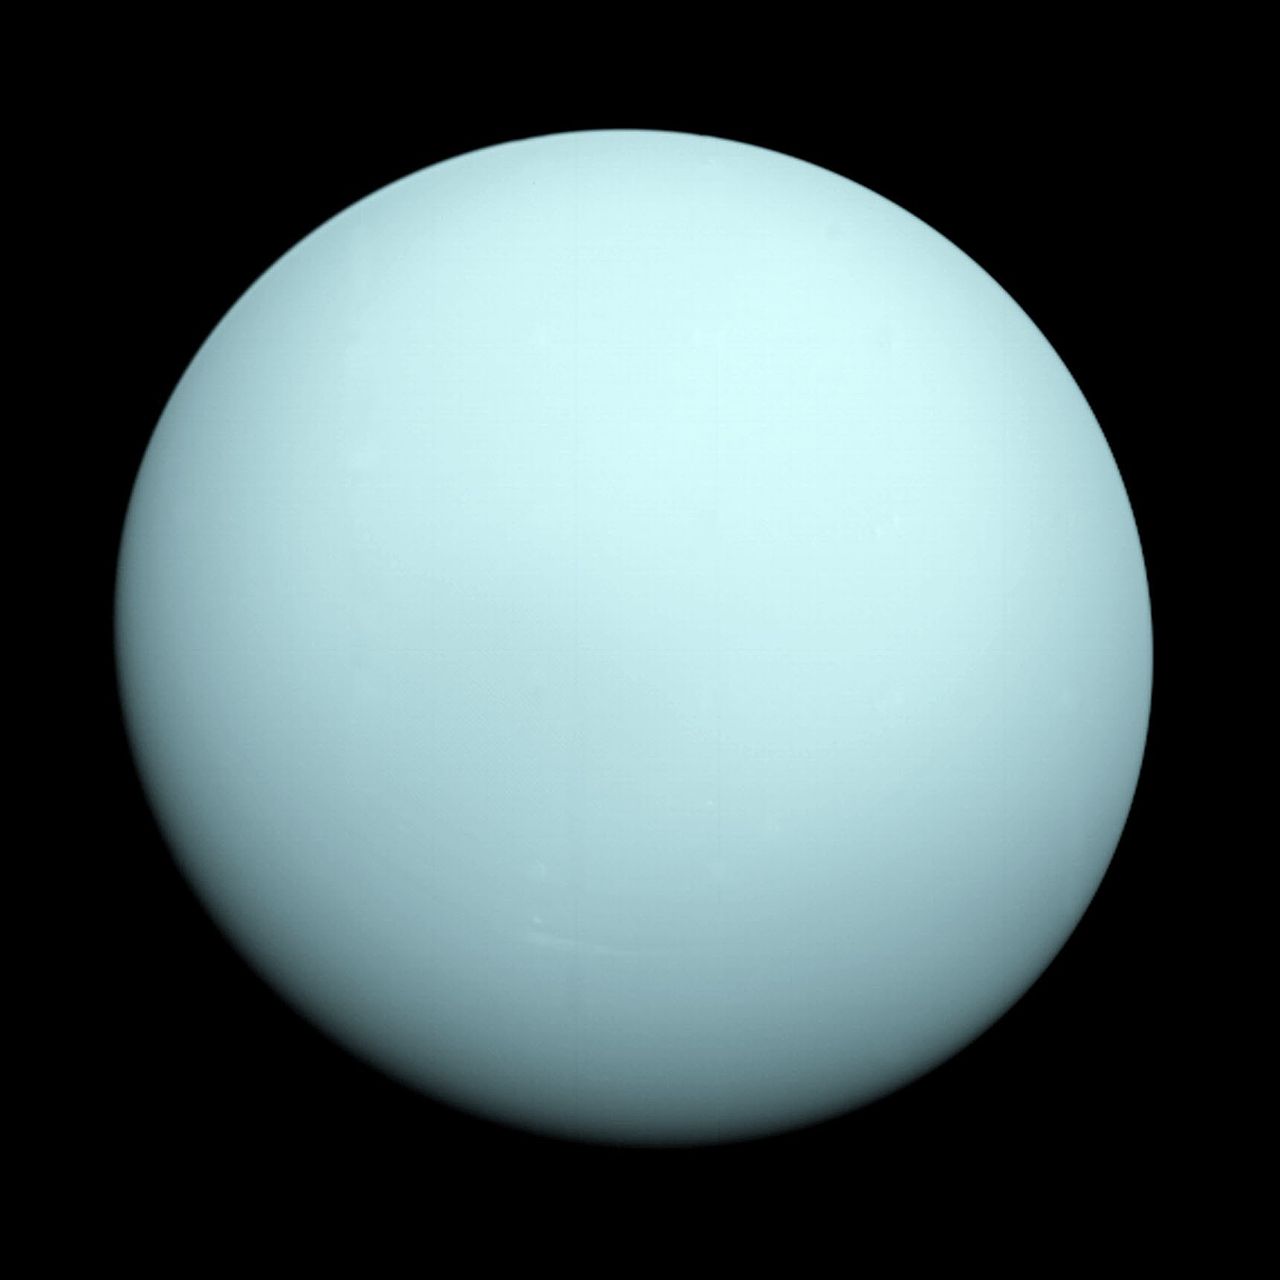 Image of Gas Giant Planet Uranus.